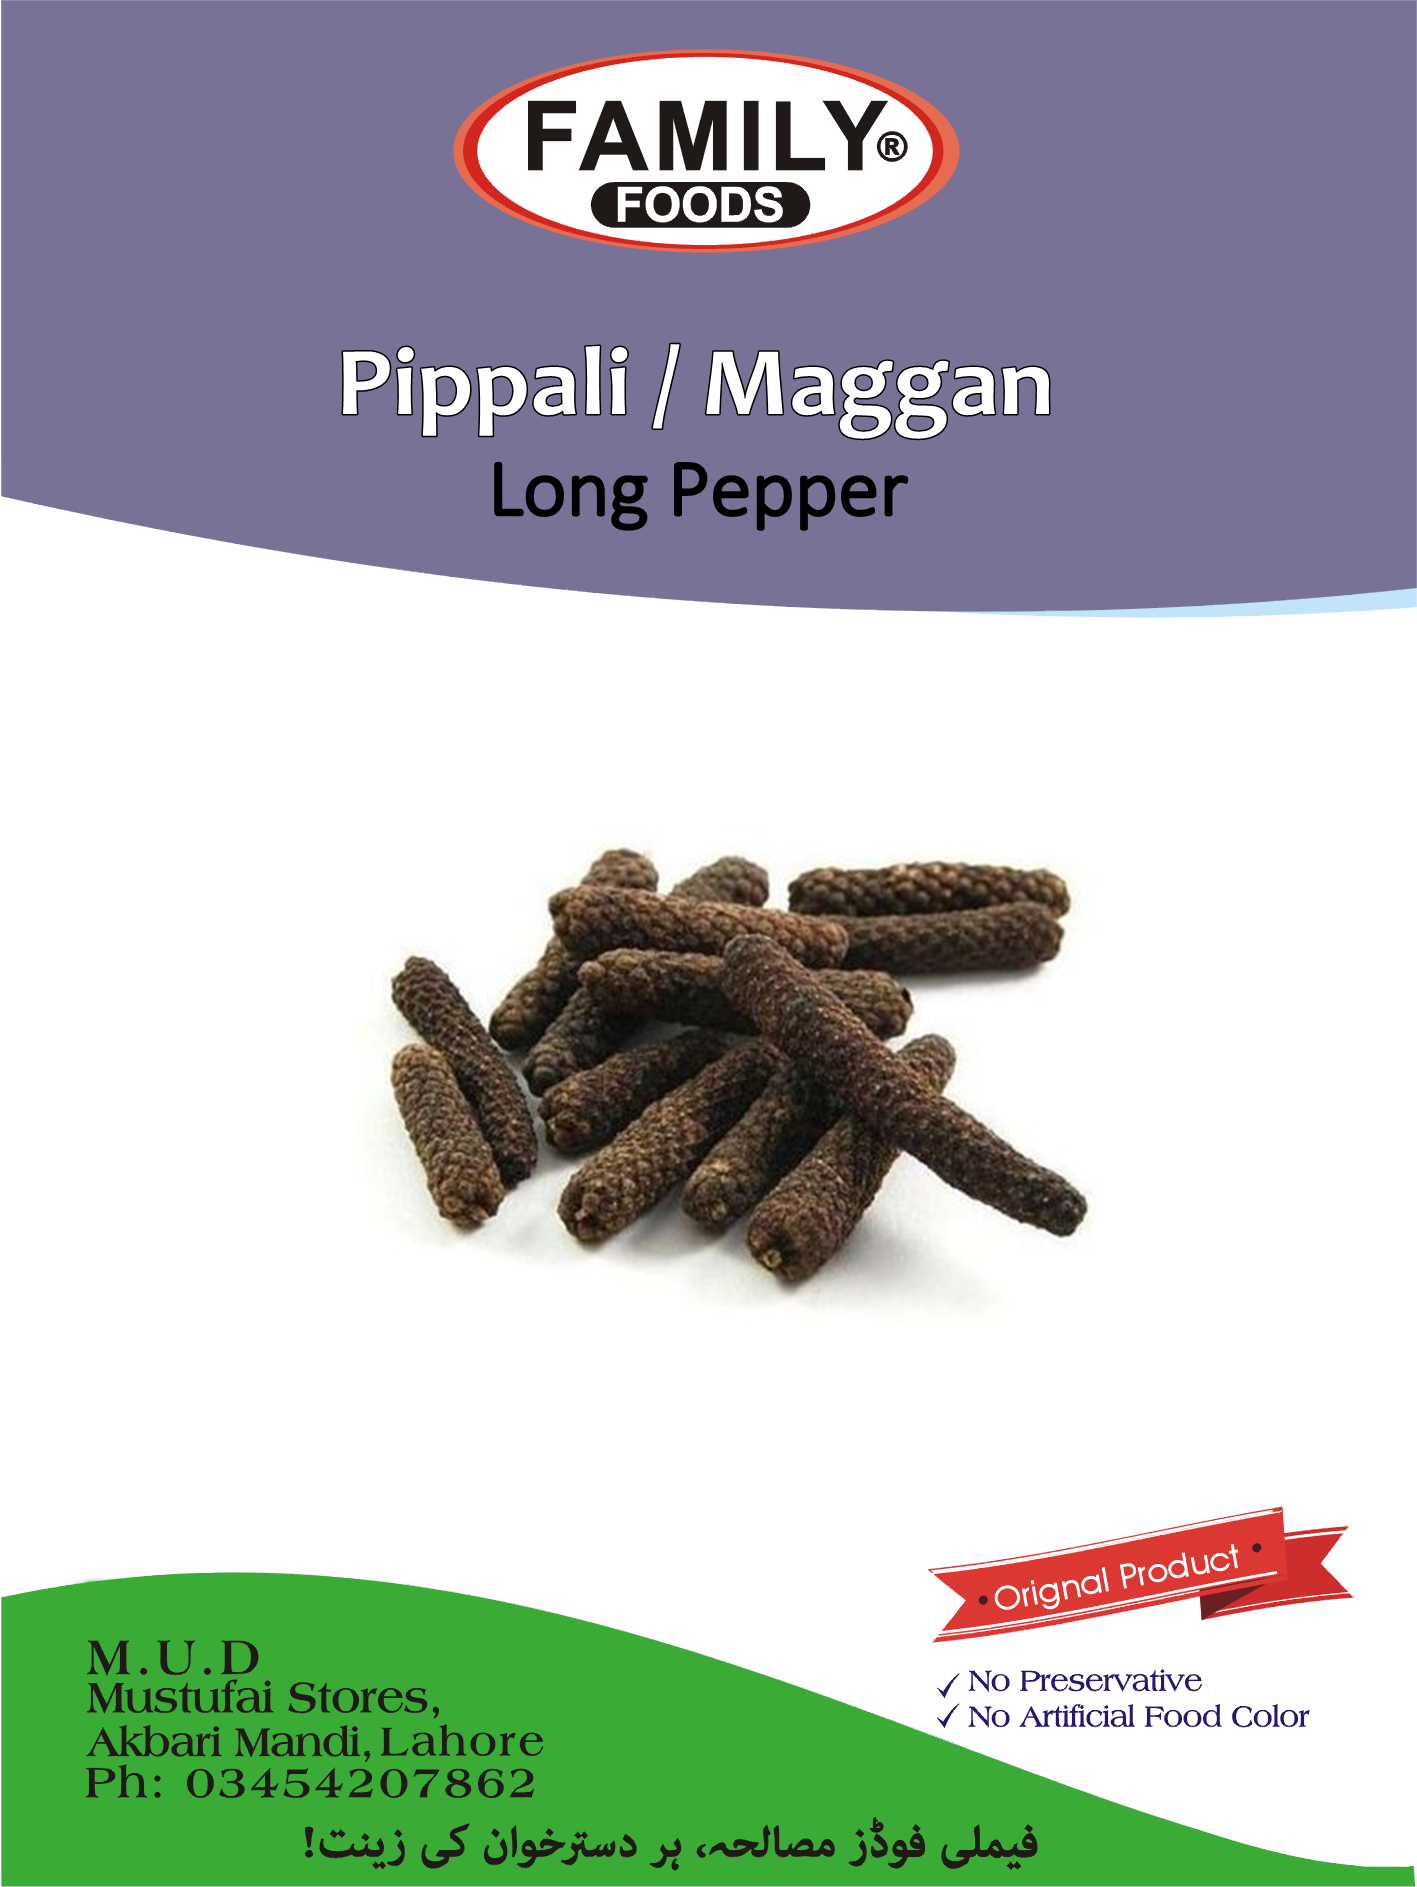 Long Pepper (Pippali) (Maggaan).